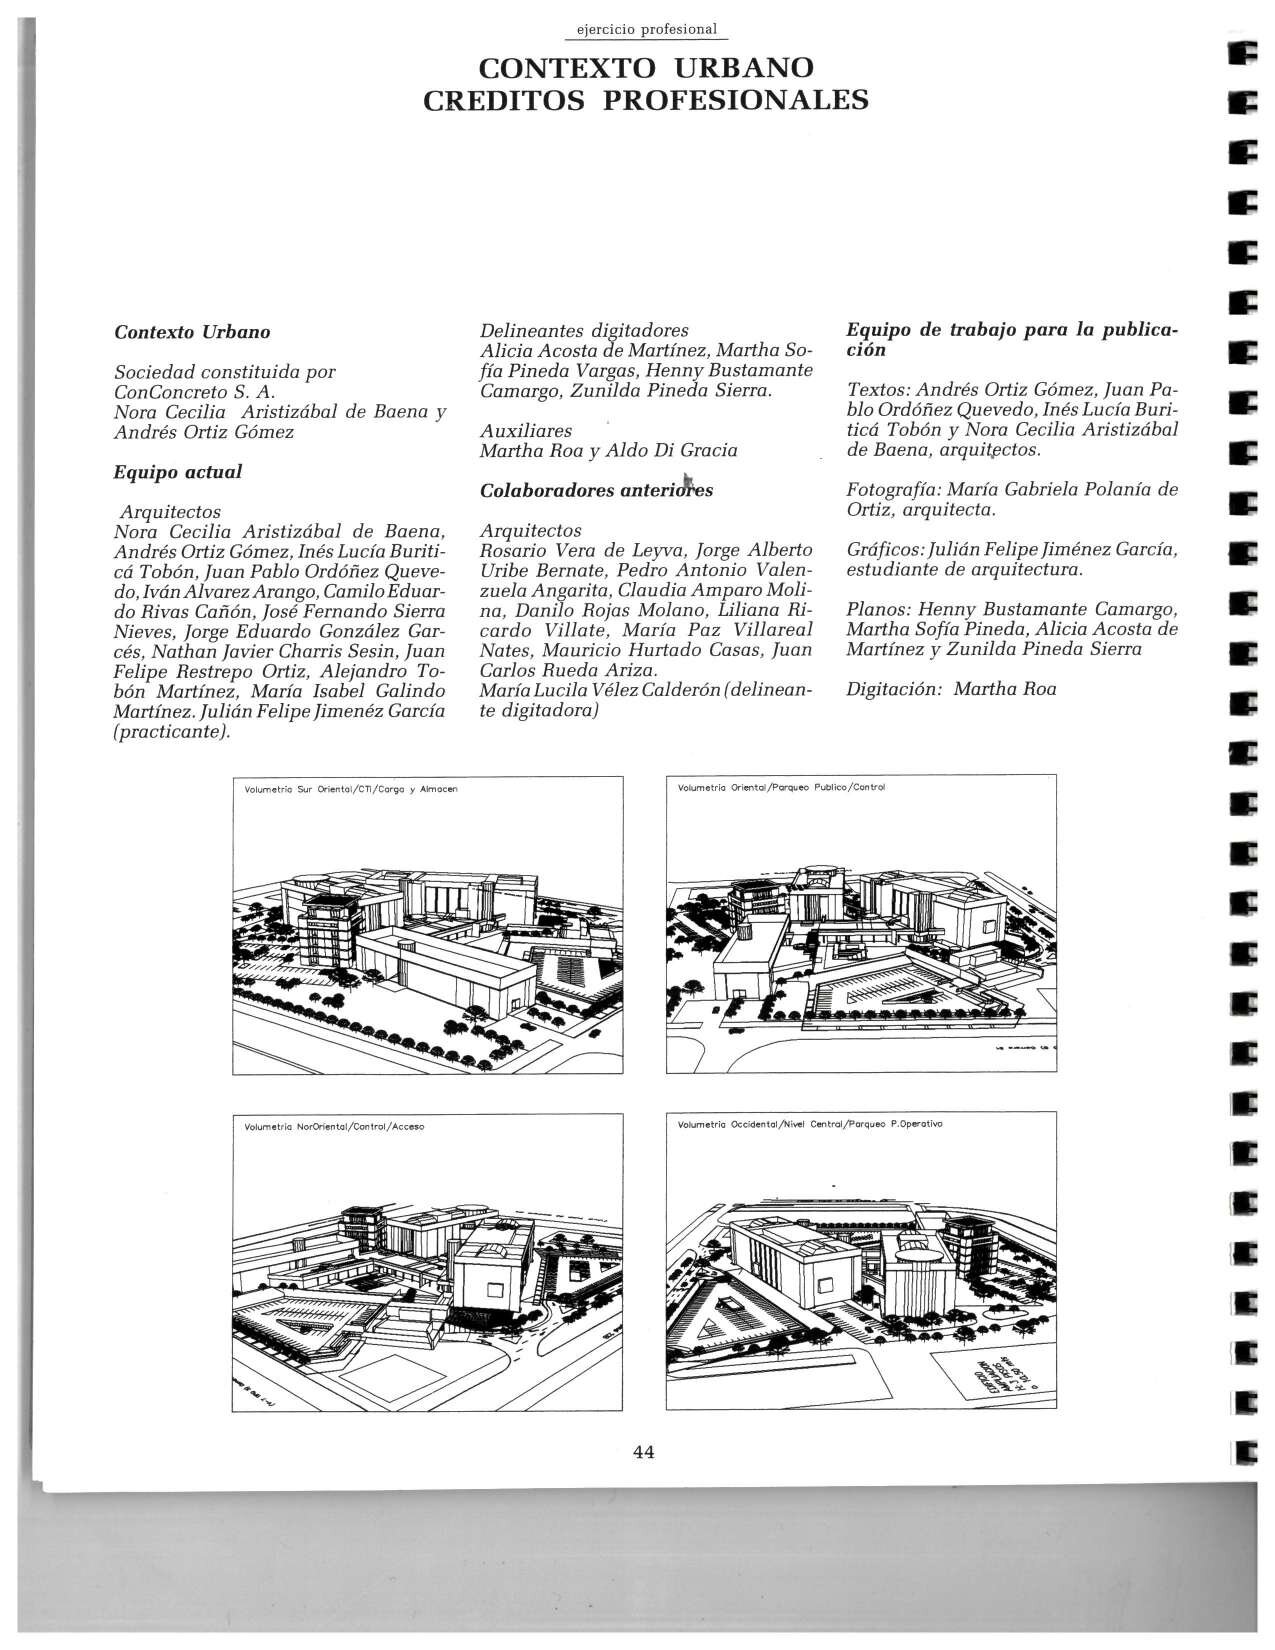 1995_Obra Contexto Urbano_Revista PROA_compressed_page-0044.jpg